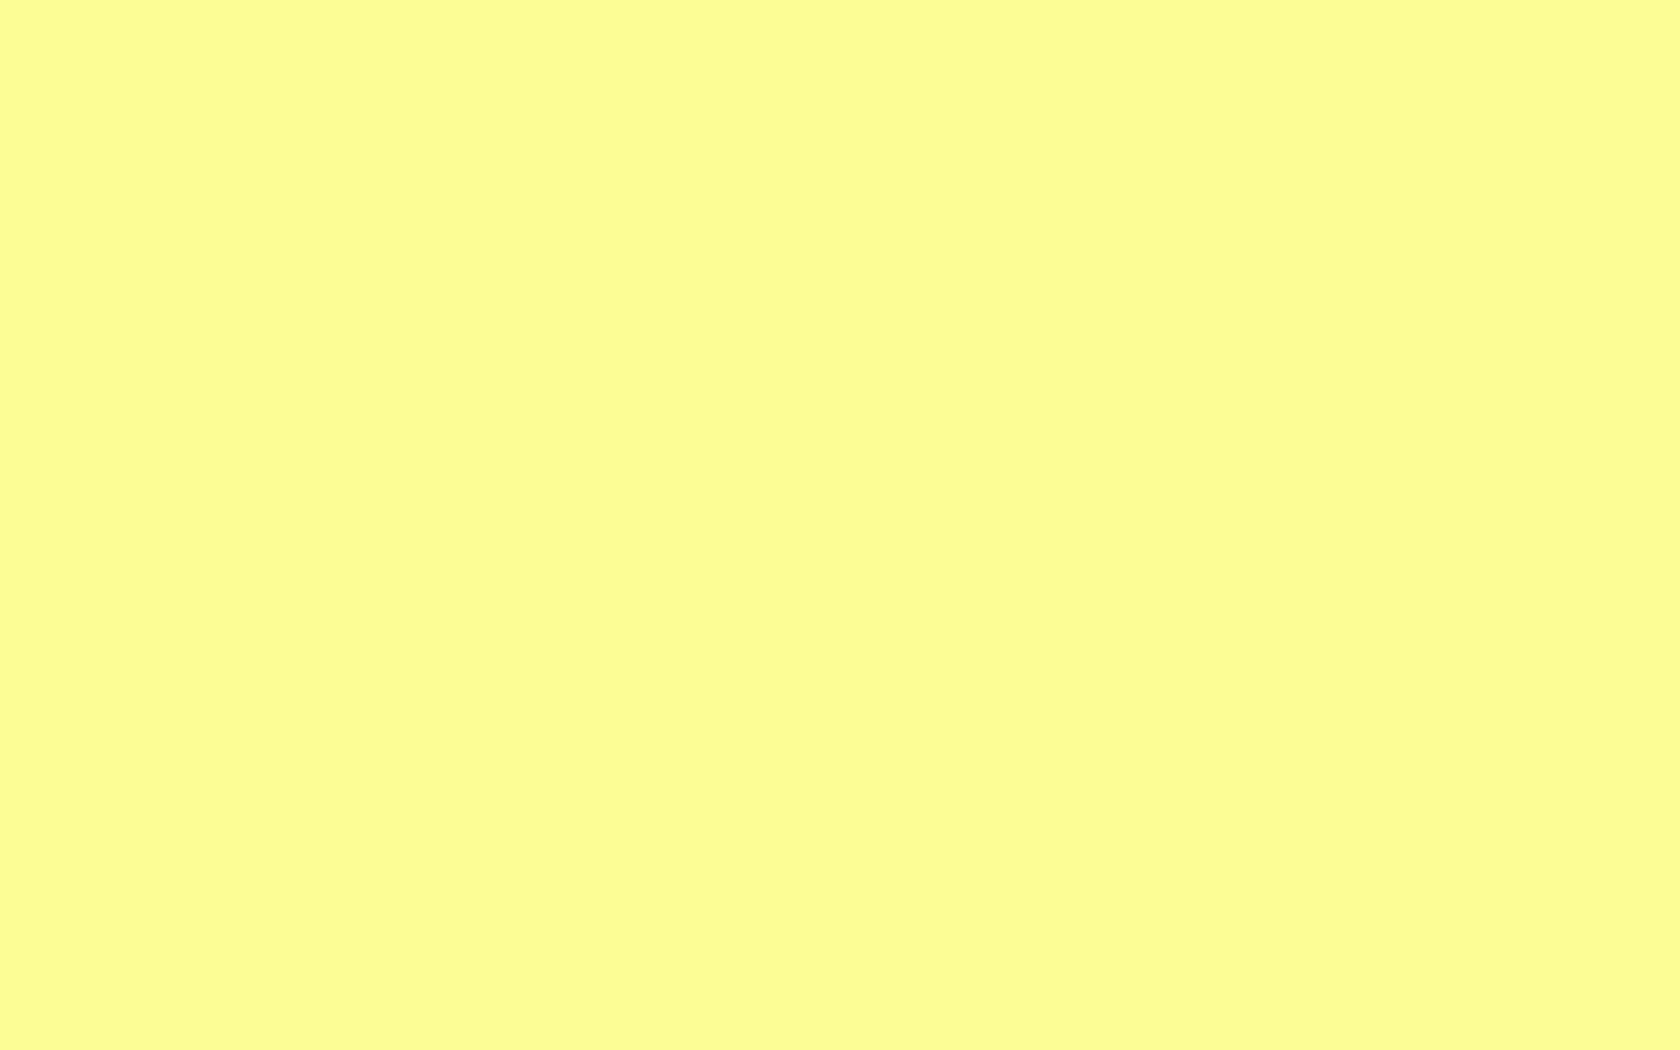 fonds d'écran tumblr mignon,vert,jaune,orange,marron,texte